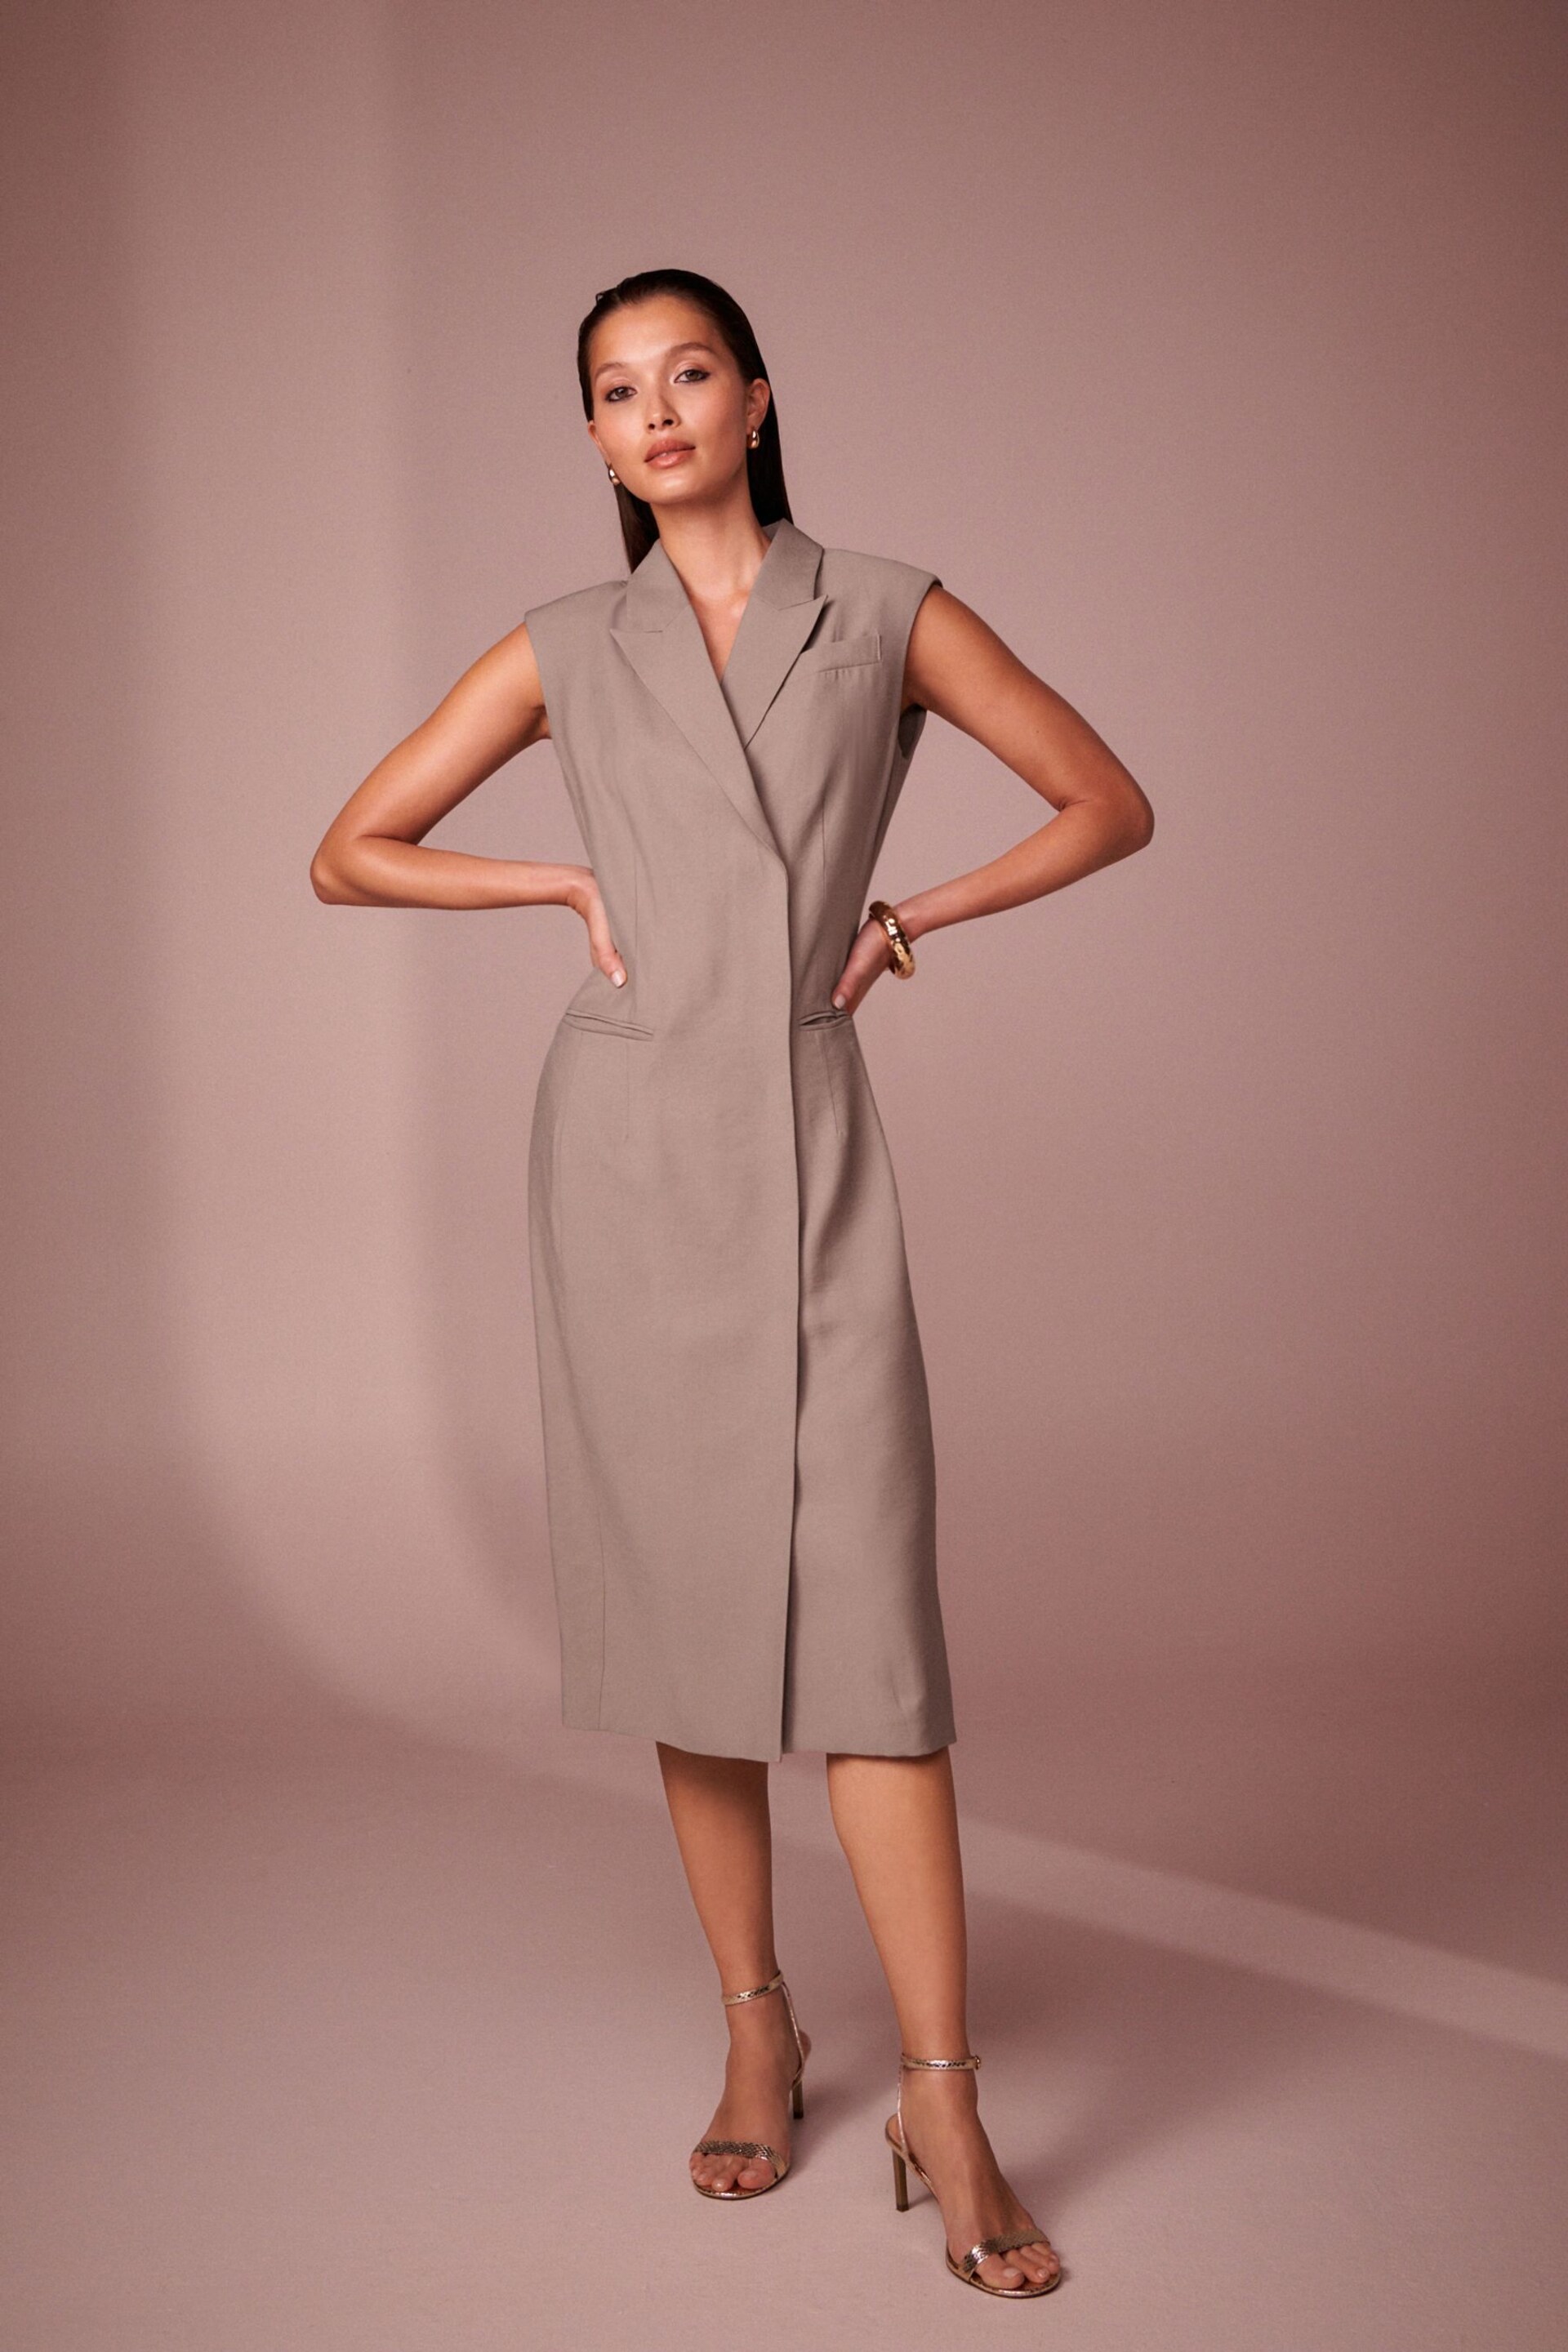 Mink Brown Mini Sleeveless Blazer Dress - Image 1 of 5